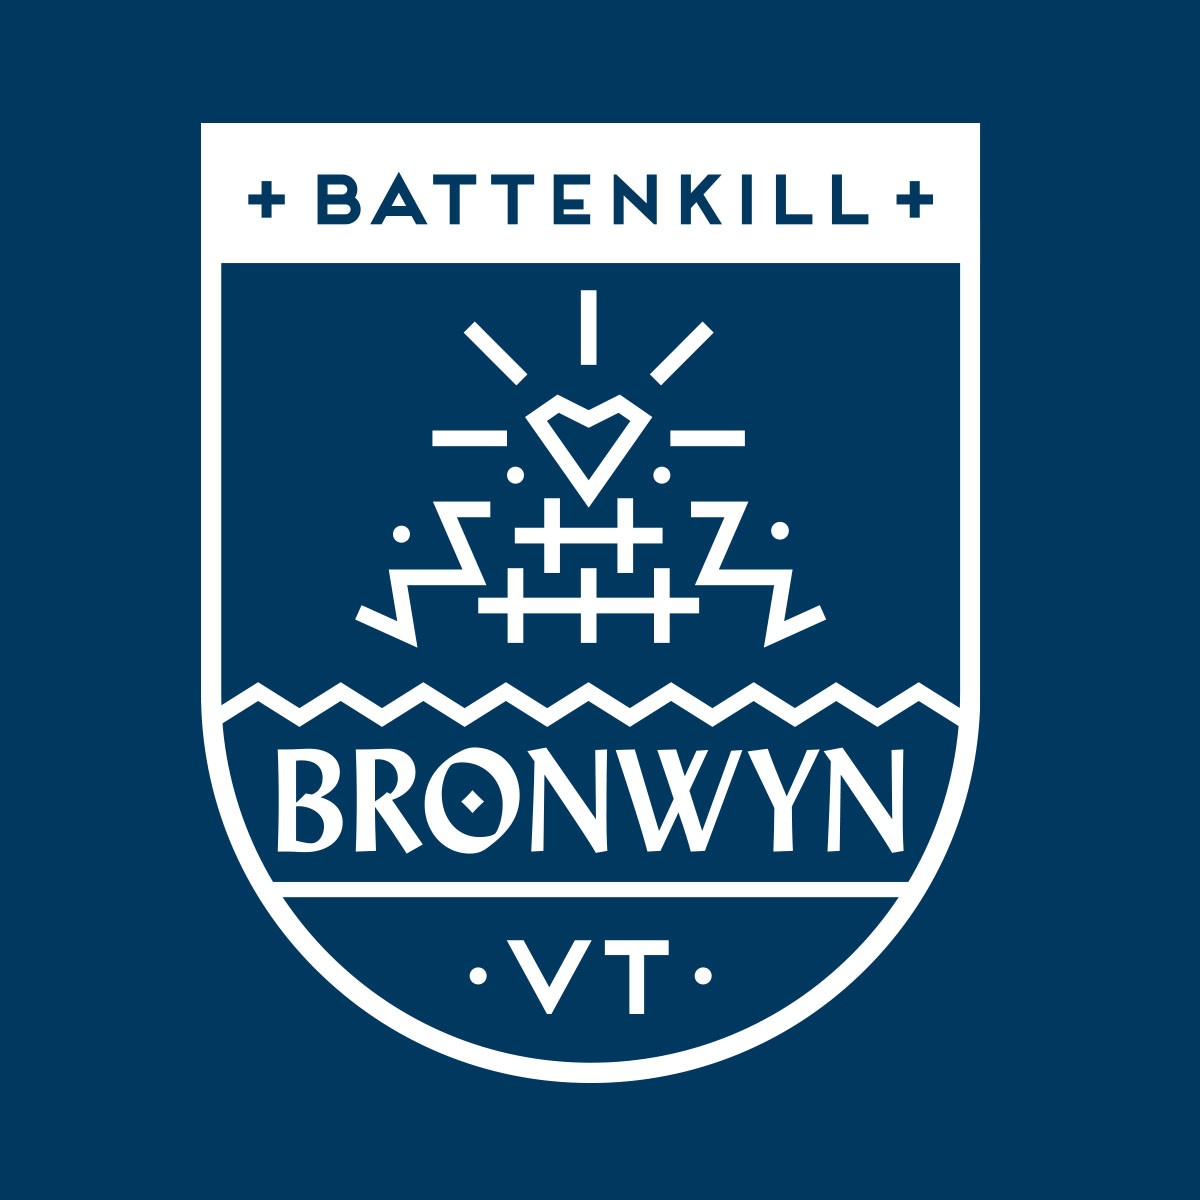 Bronwyn-on-Battenkill